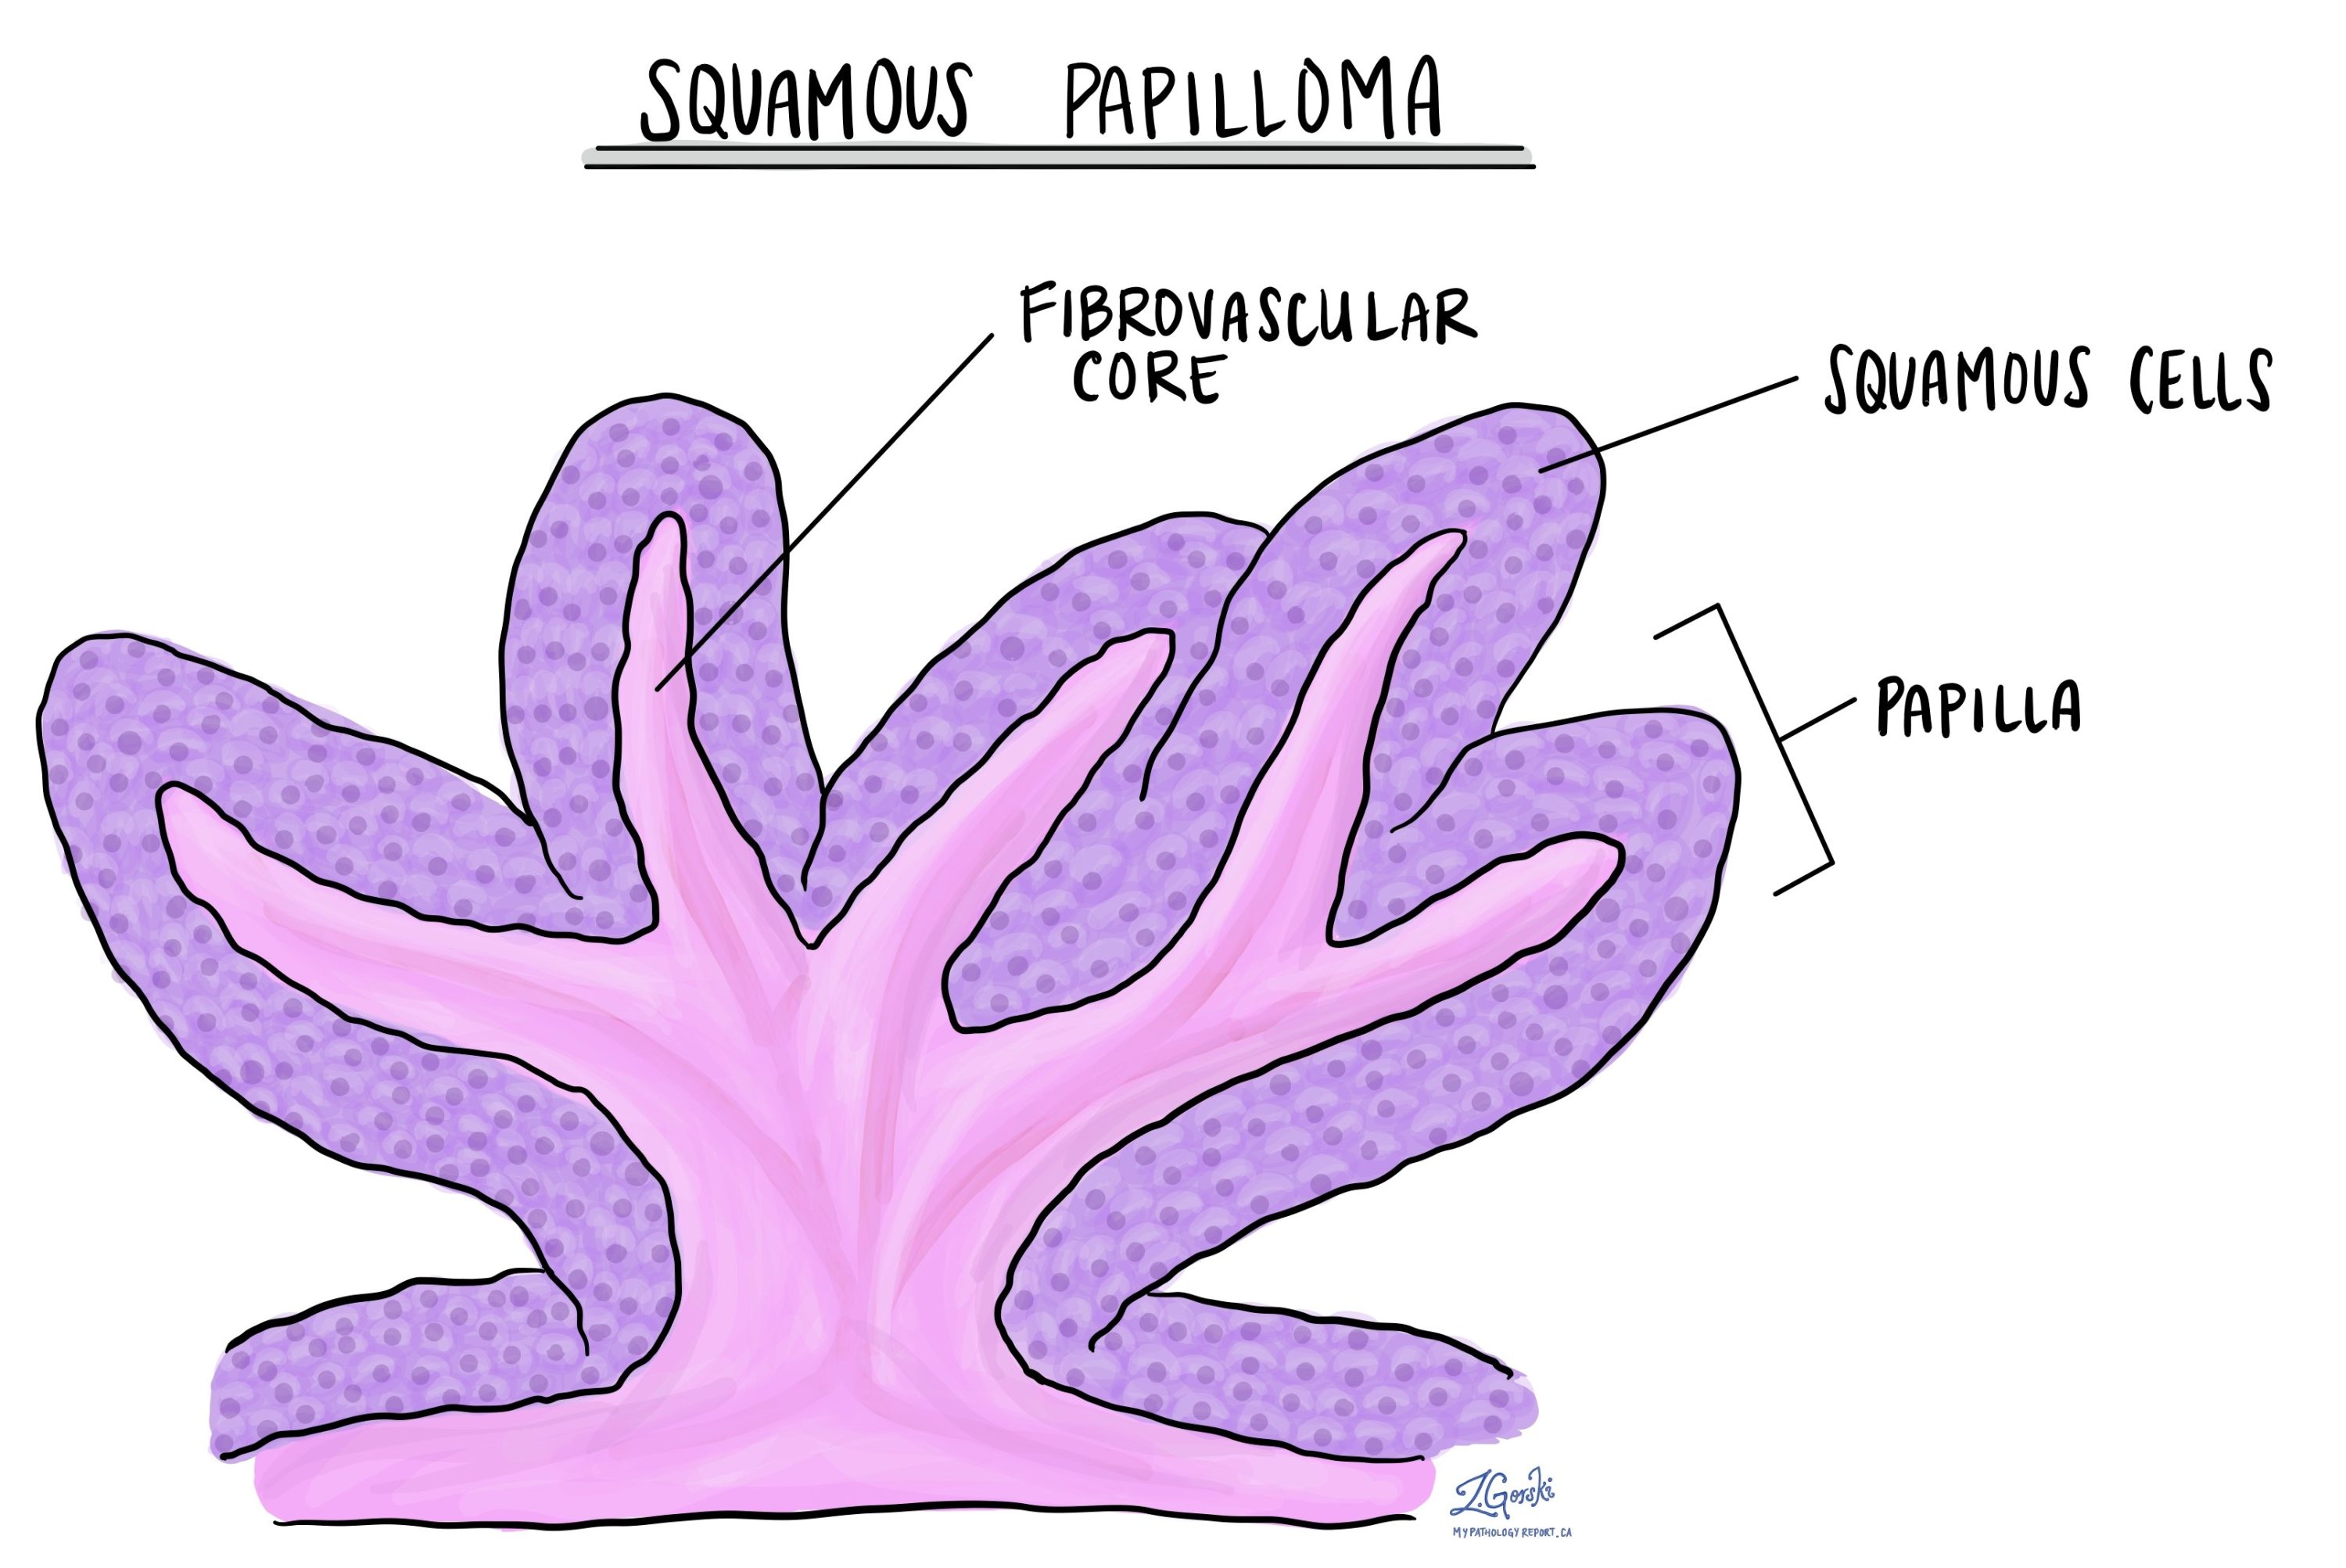 squamous papilloma oral cavity